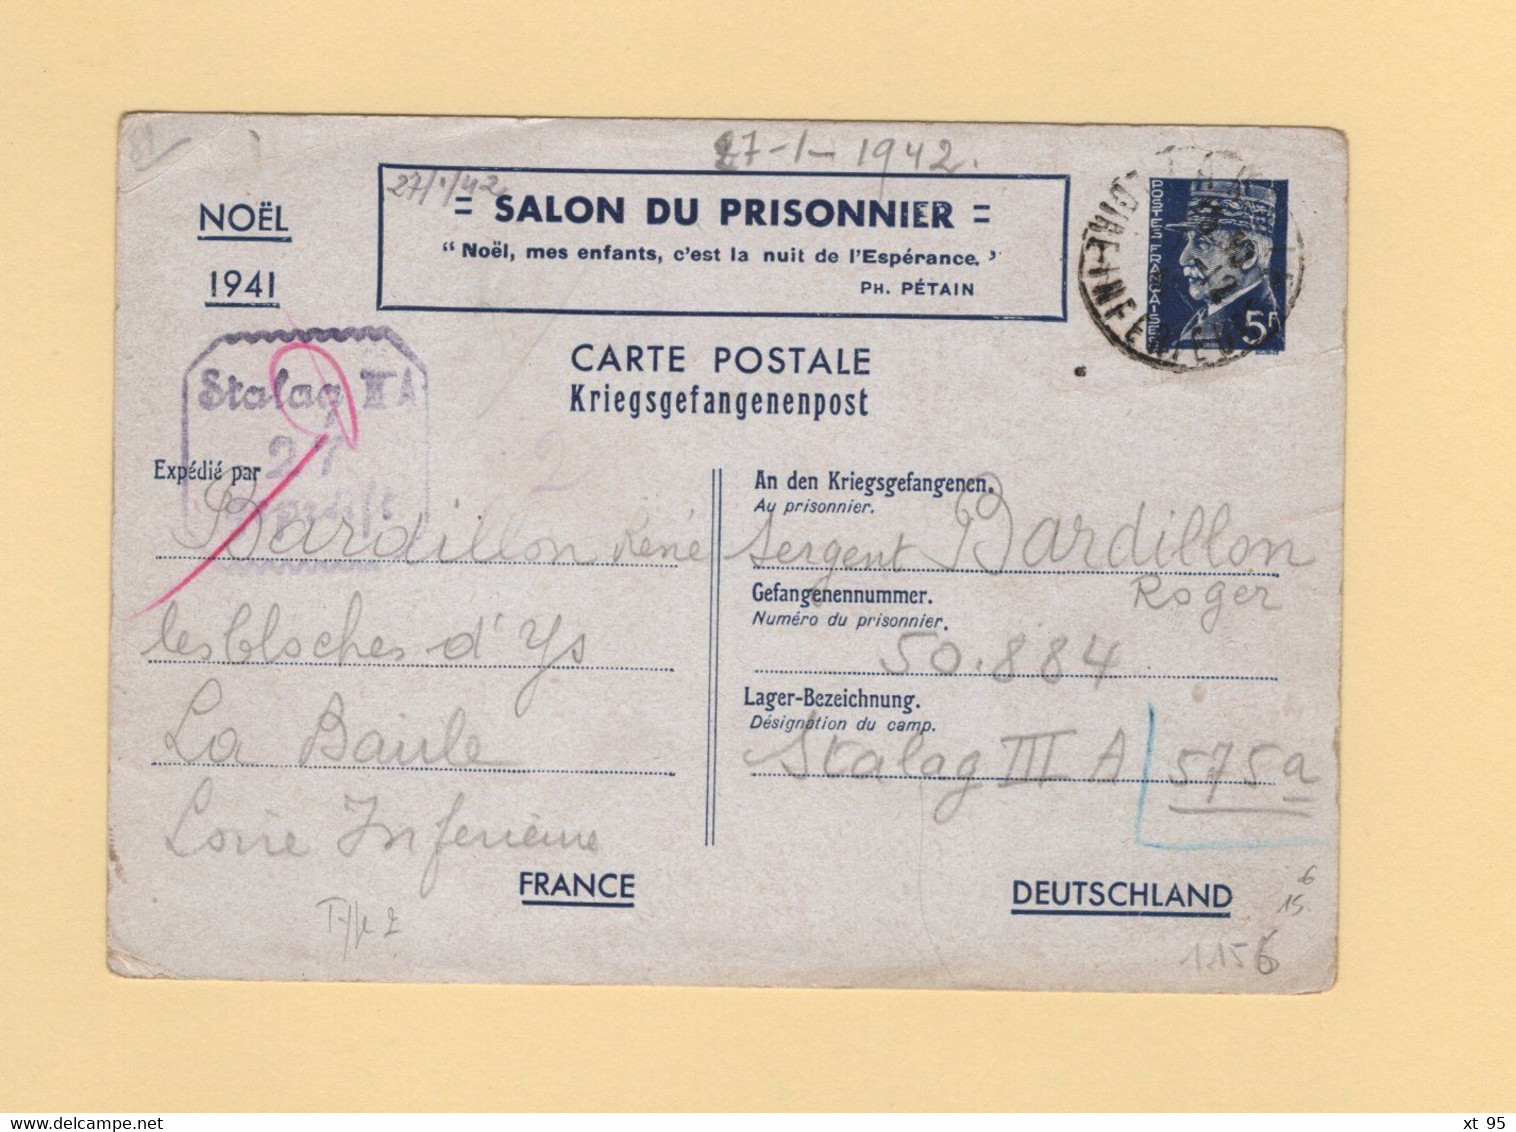 Salon Du Prisonnier - Entier Petain Destination, Stalag III - 1941 - WW II